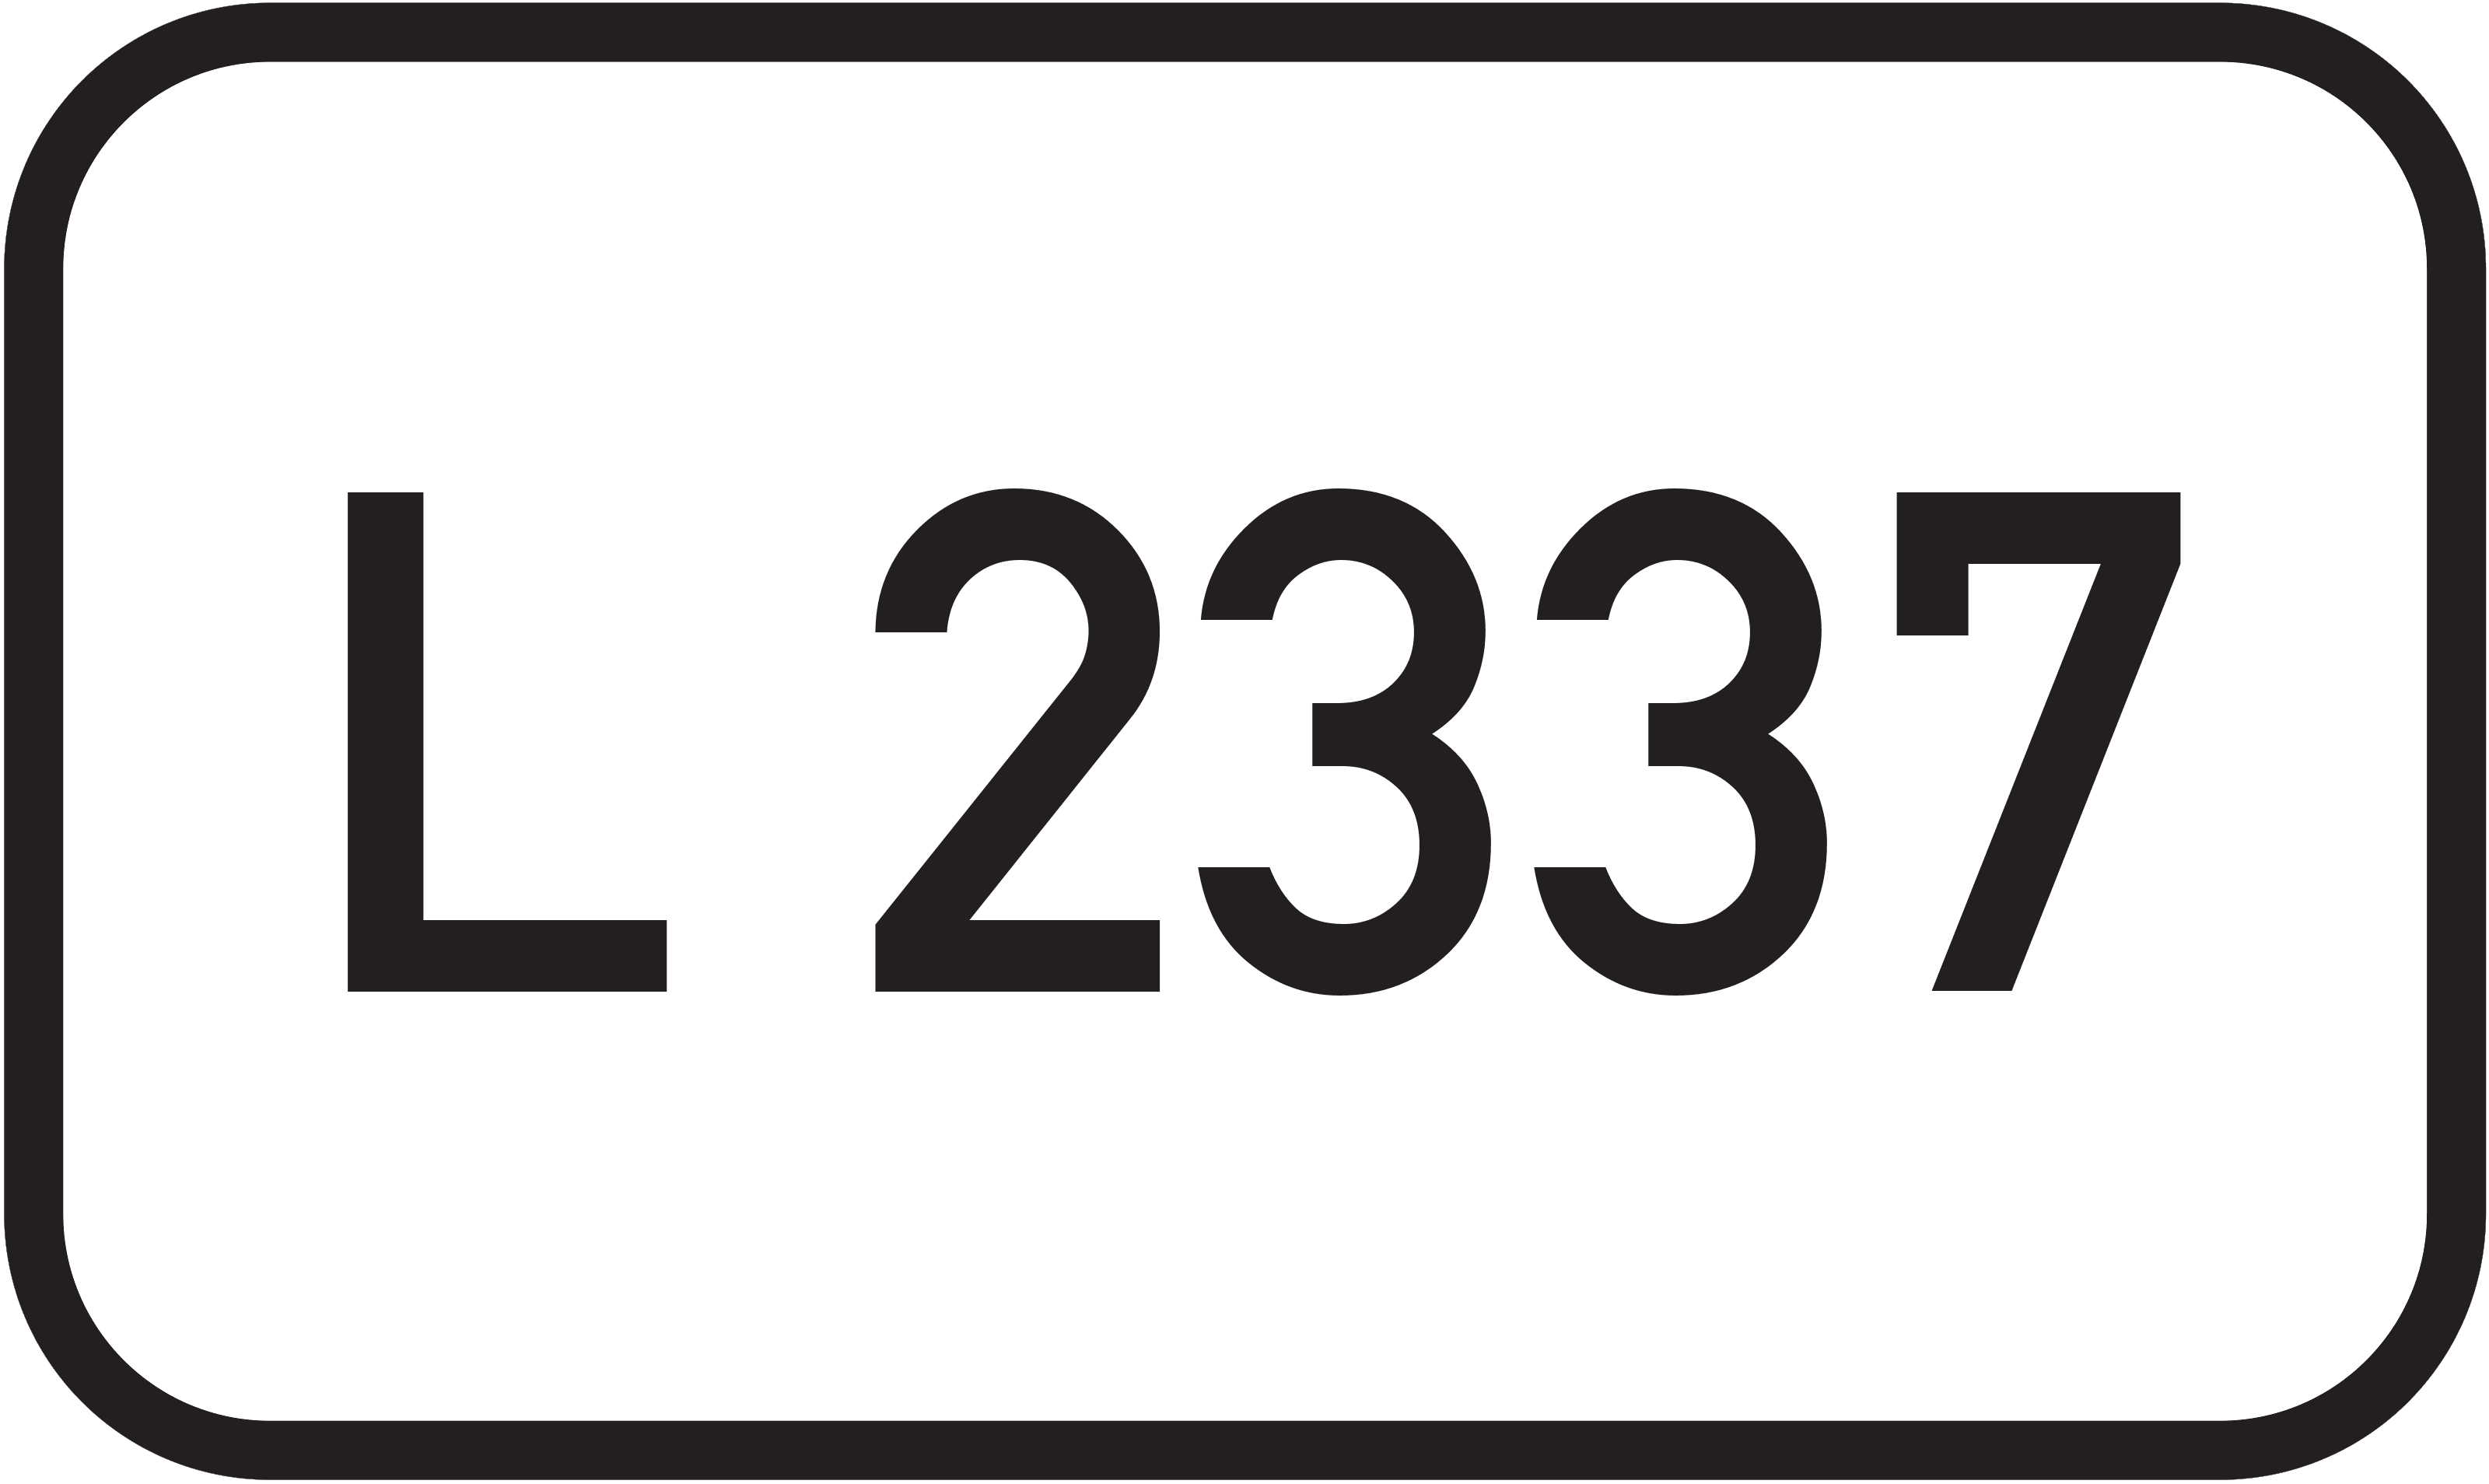 Straßenschild Landesstraße L 2337